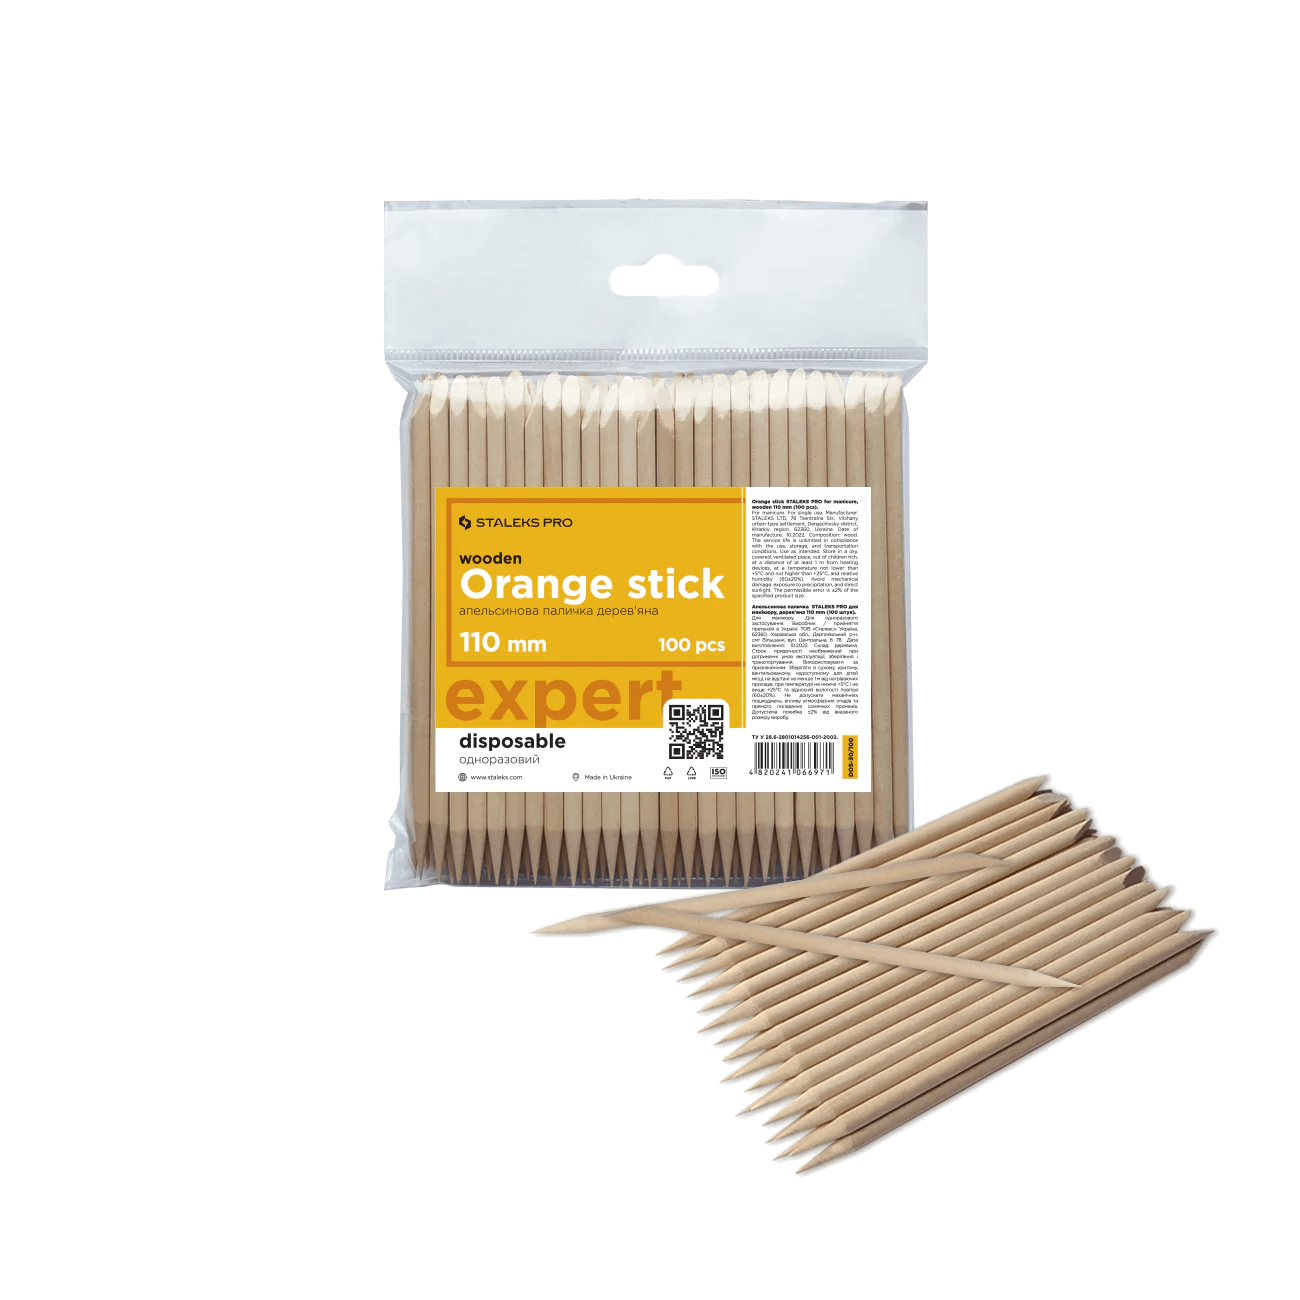 Orange stick STALEKS PRO for manicure, wooden 110 mm (100 pcs) - DOS-30/100